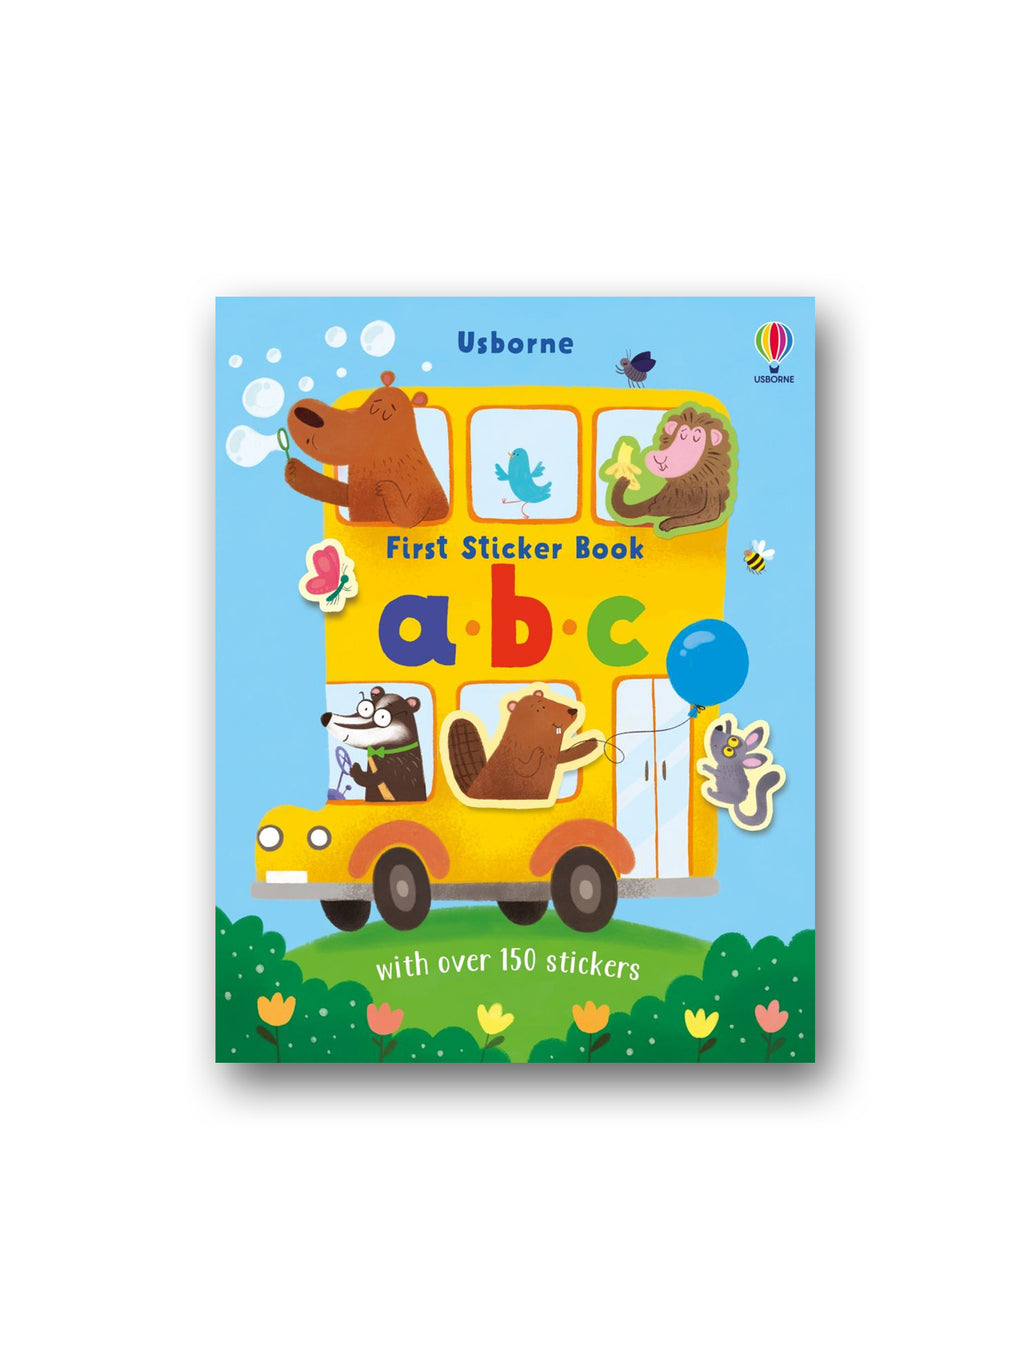 First Sticker Book ABC